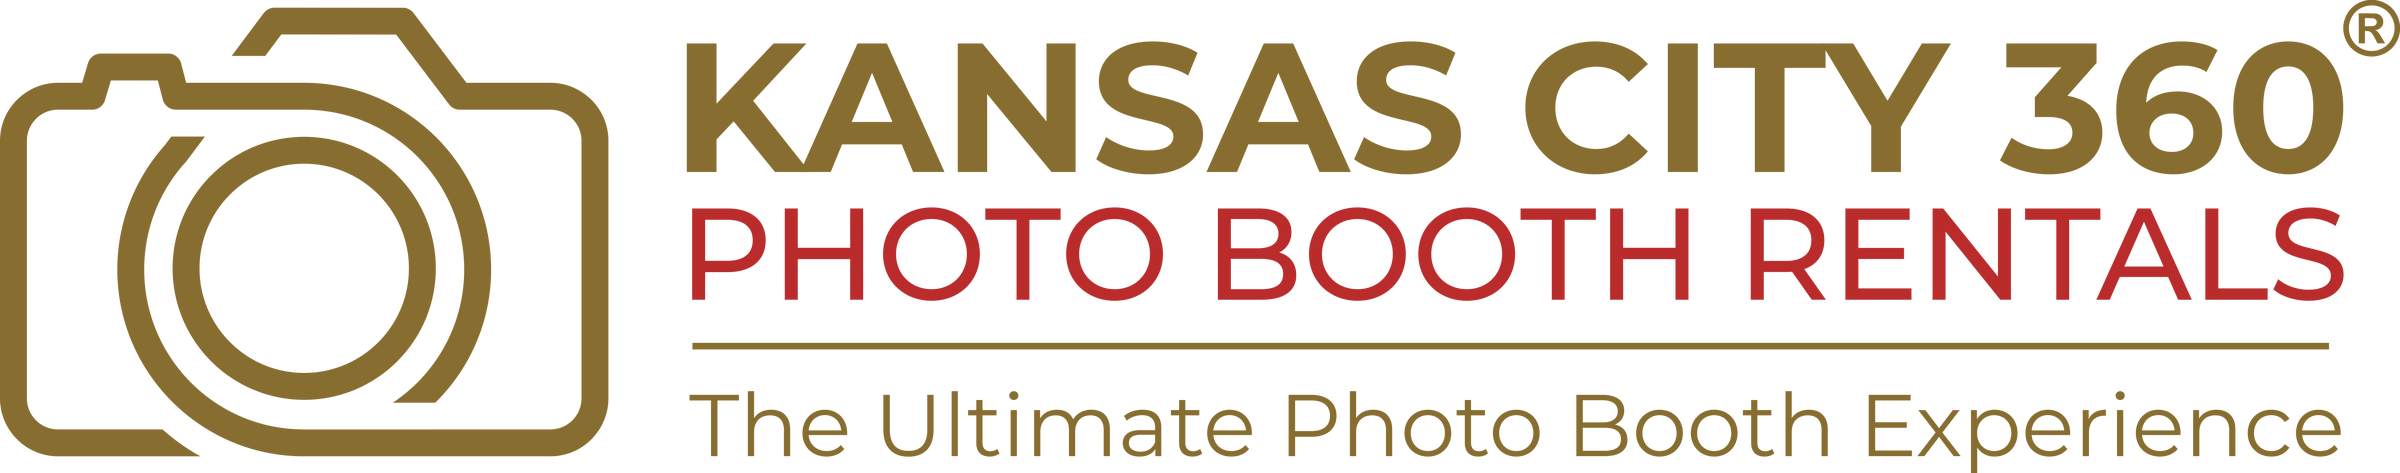 Kansas City Photo Booth